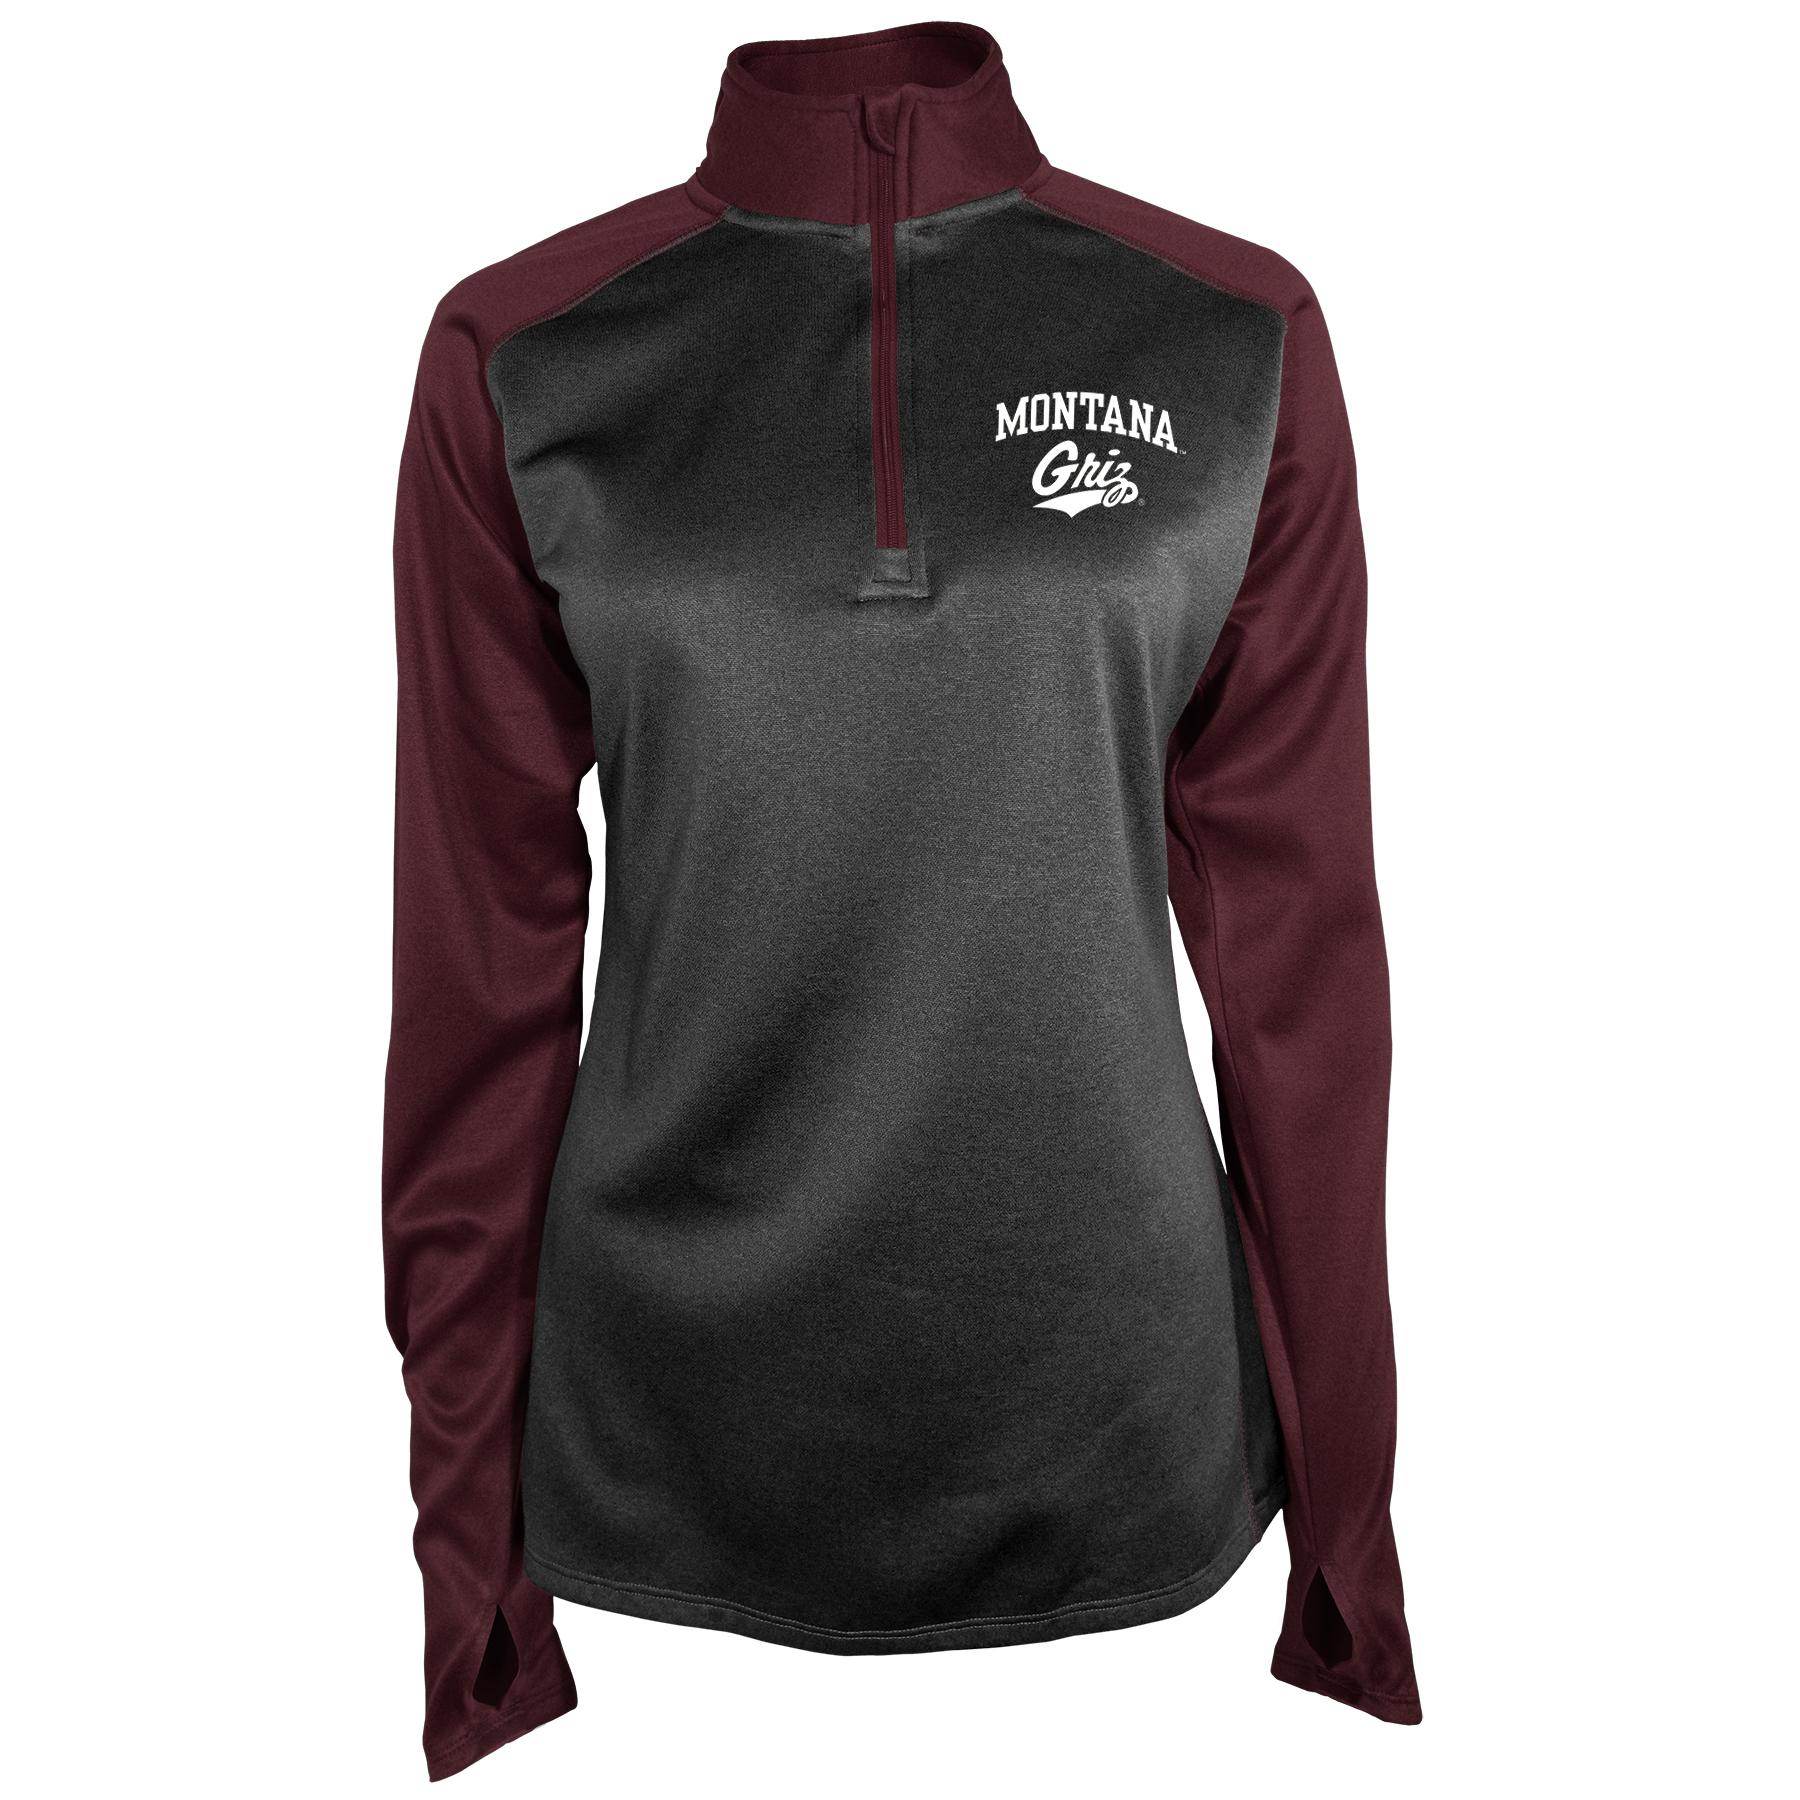 NCAA Women's Quarter-Zip Athletic Shirt - University of Montana